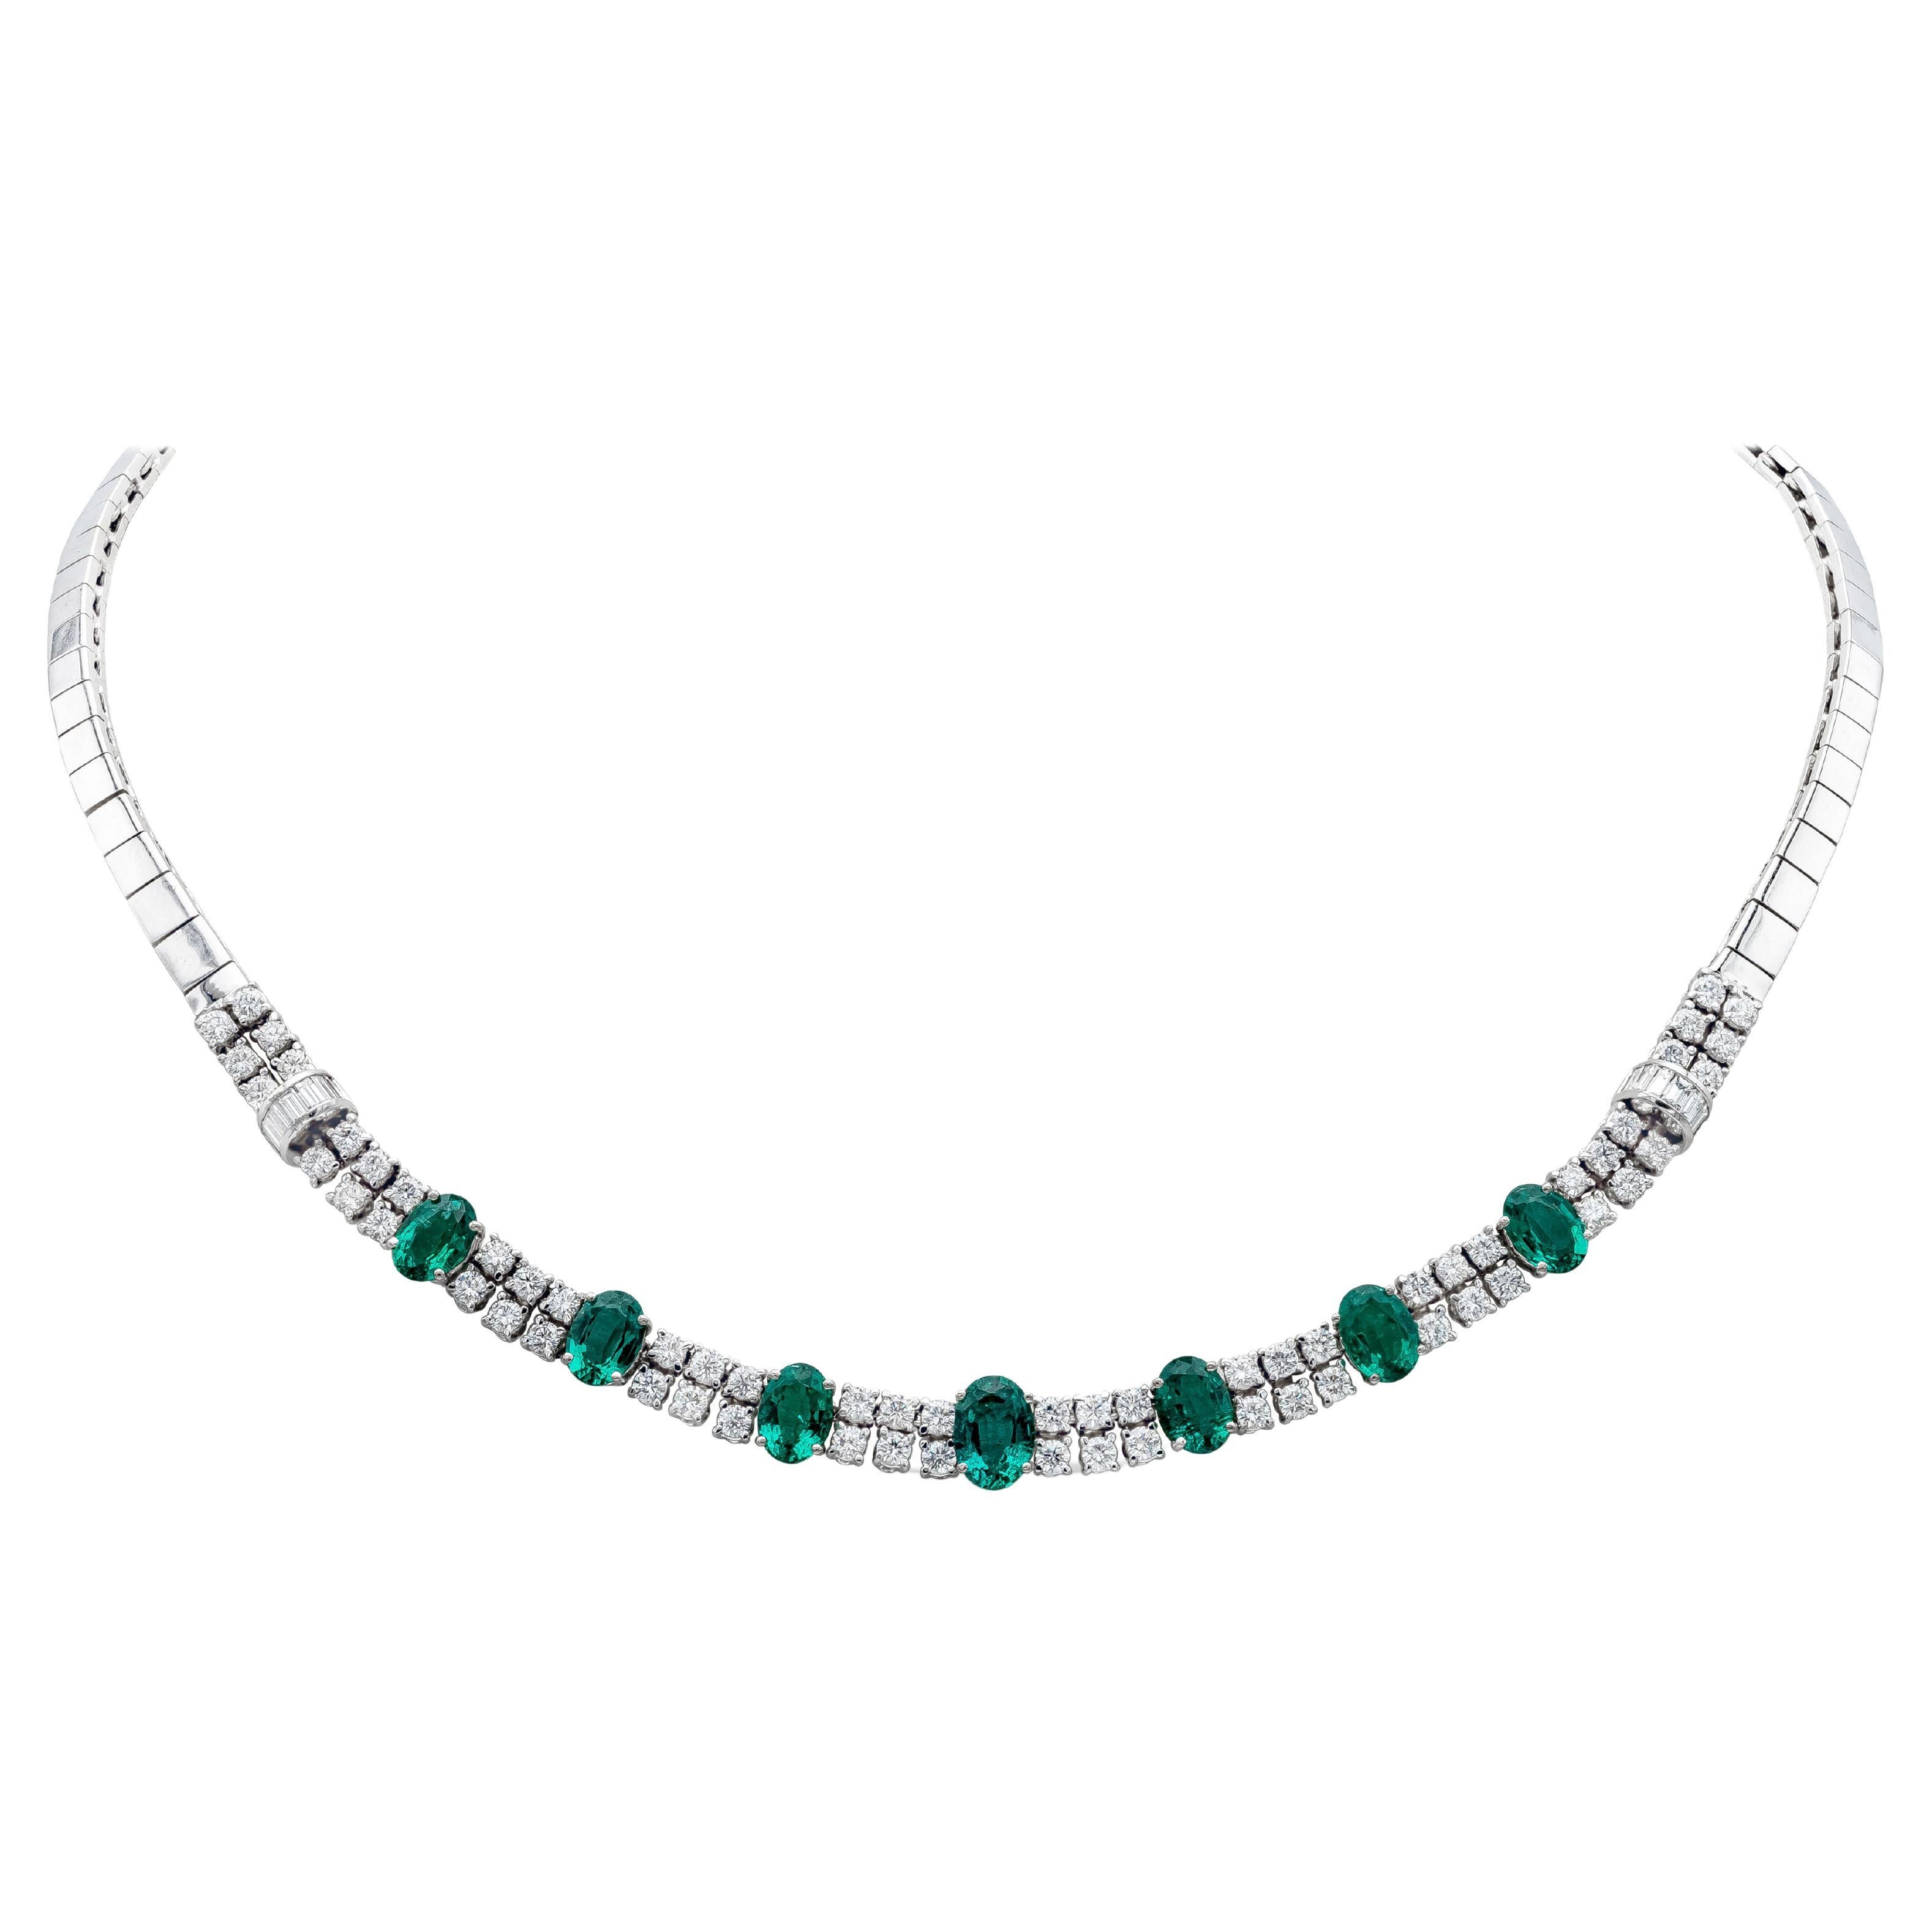 Roman Malakov 9.70 Carat Total, Oval Cut Green Emerald and Diamond Necklace